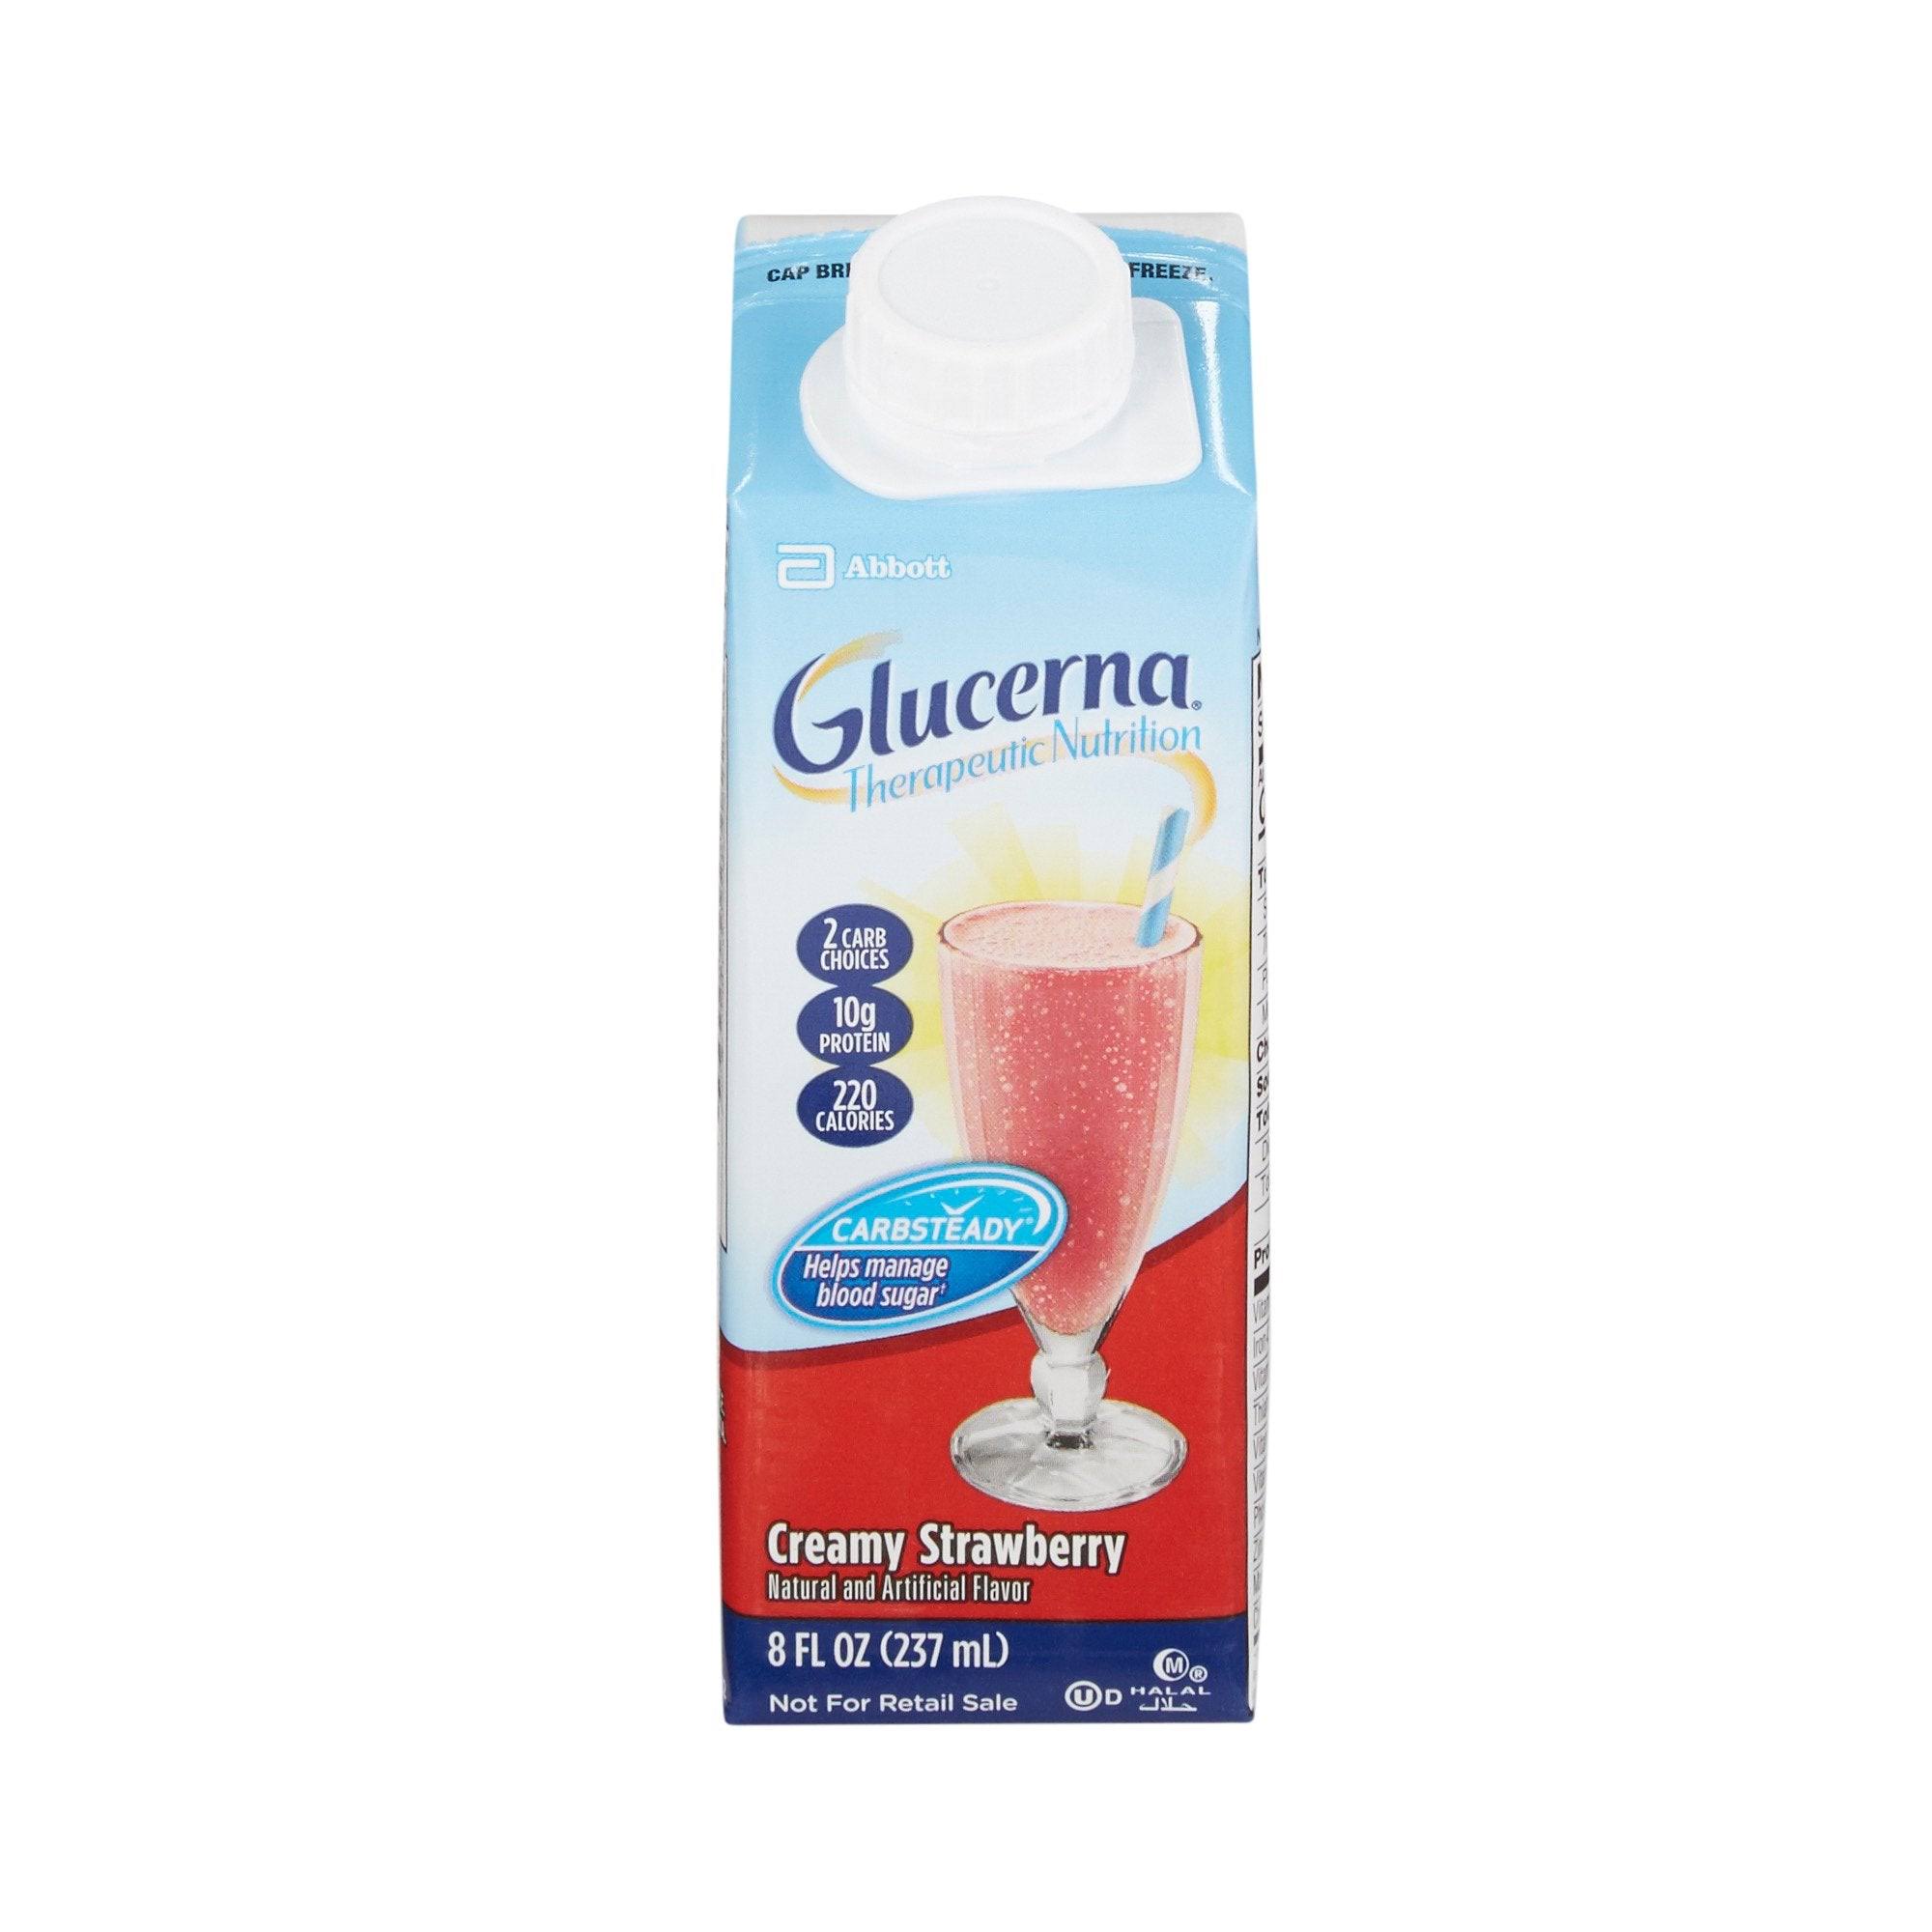 Glucerna Therapeutic Nutrition Shake Strawberry Oral Supplement, 8 fl. oz. Carton